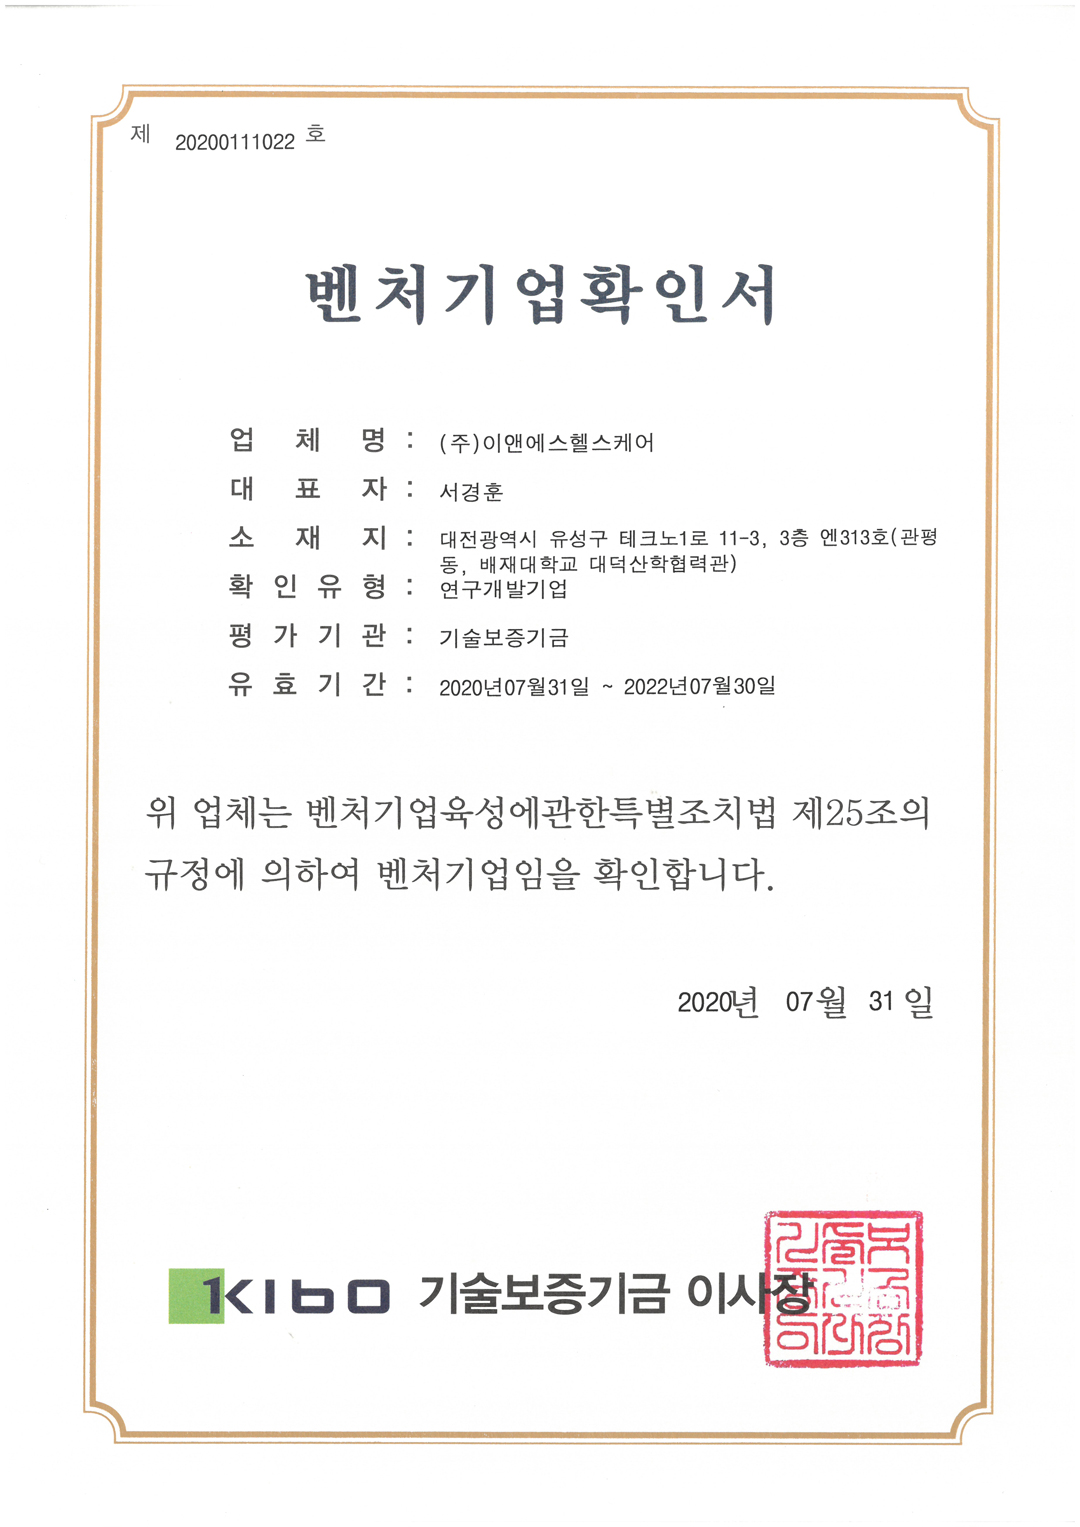 Venture Company certificate [첨부 이미지1]